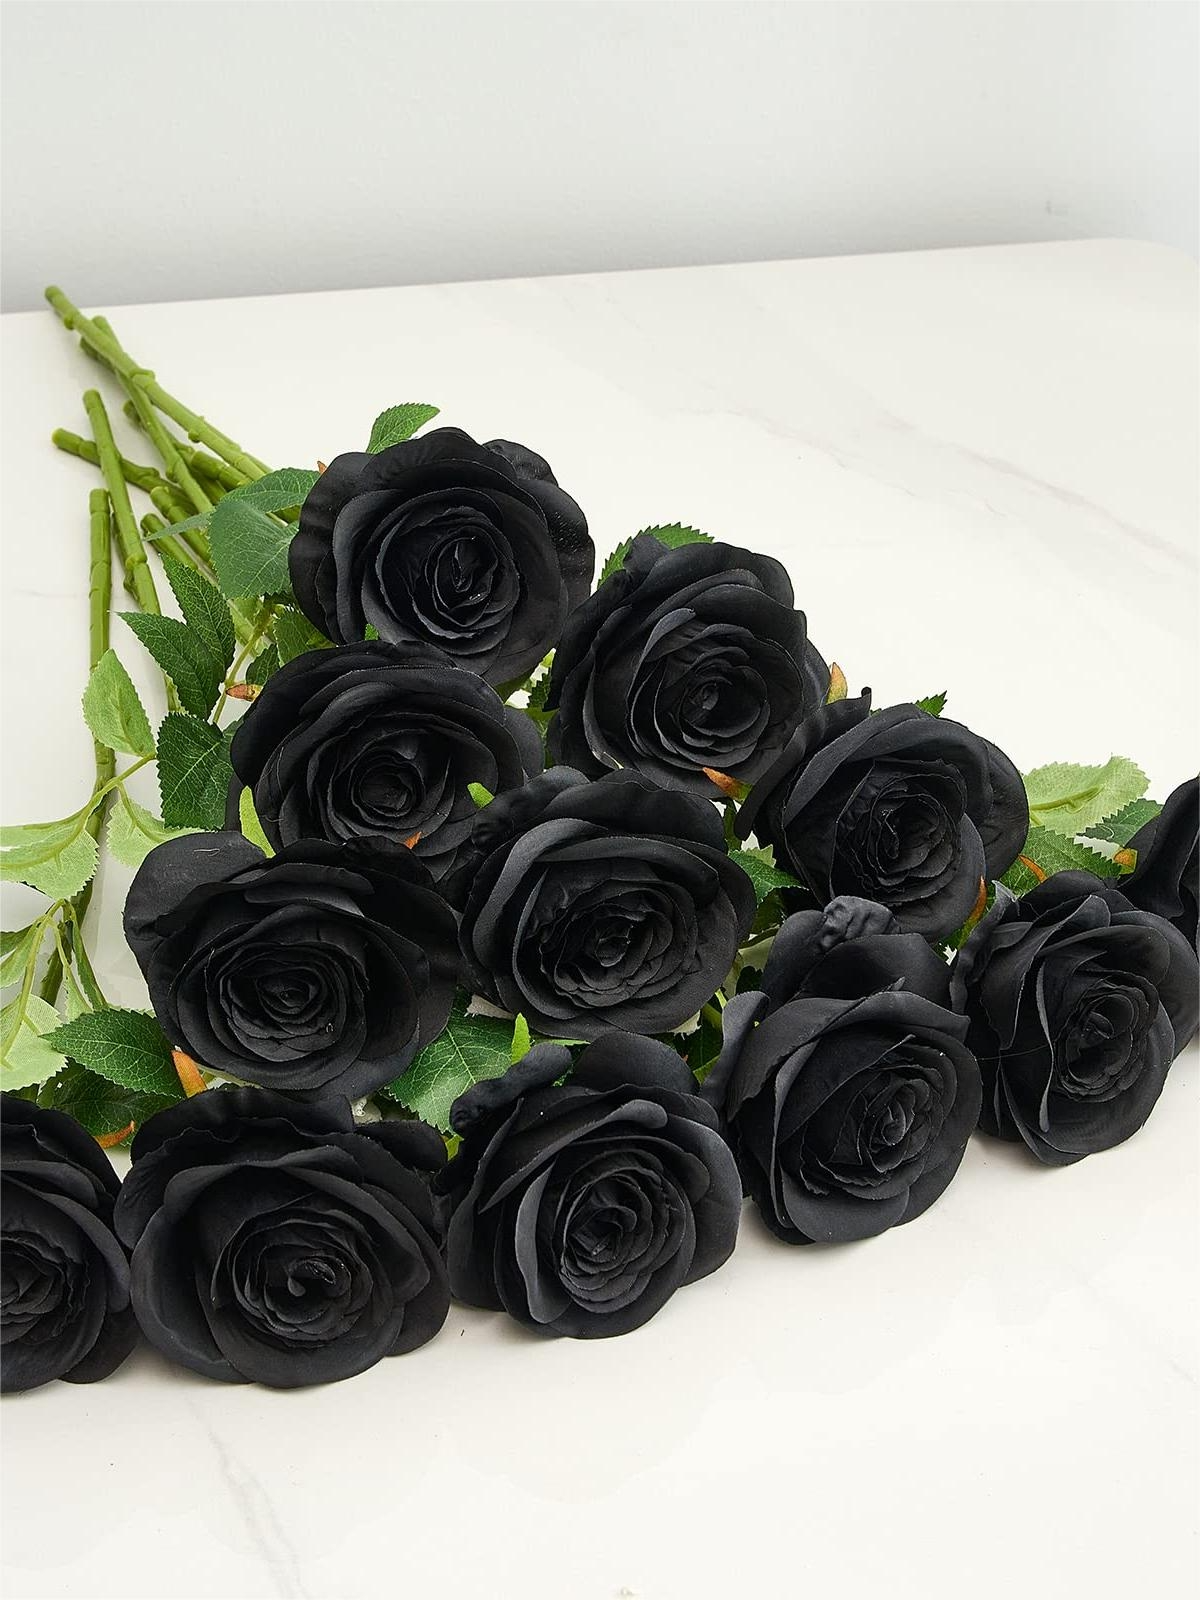 Black Artificial Rose Flowers With Long Stems Wedding Bouquet Centerpieces Decorations HH8027